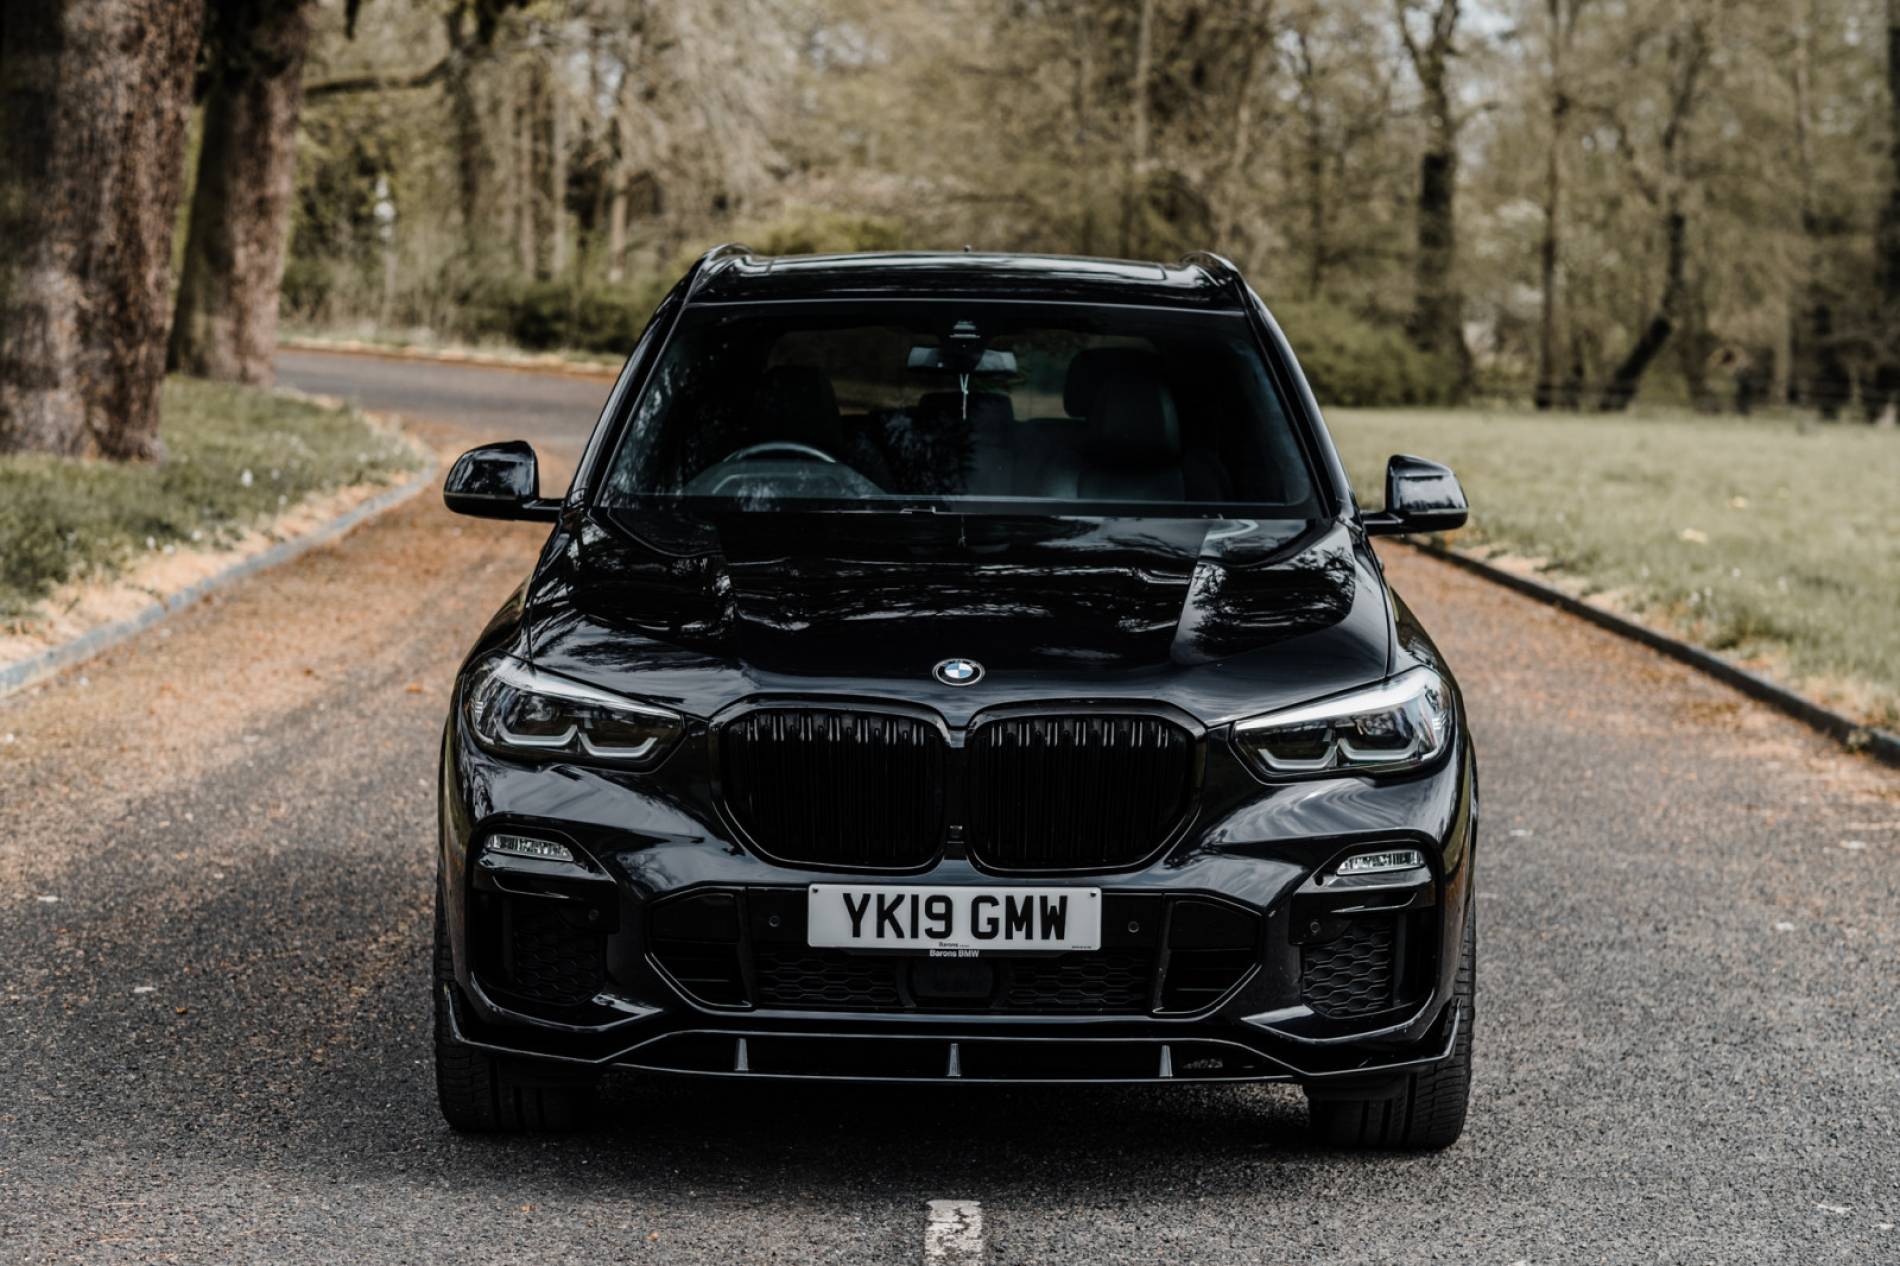 2019 BMW X5 30D &amp; £1000